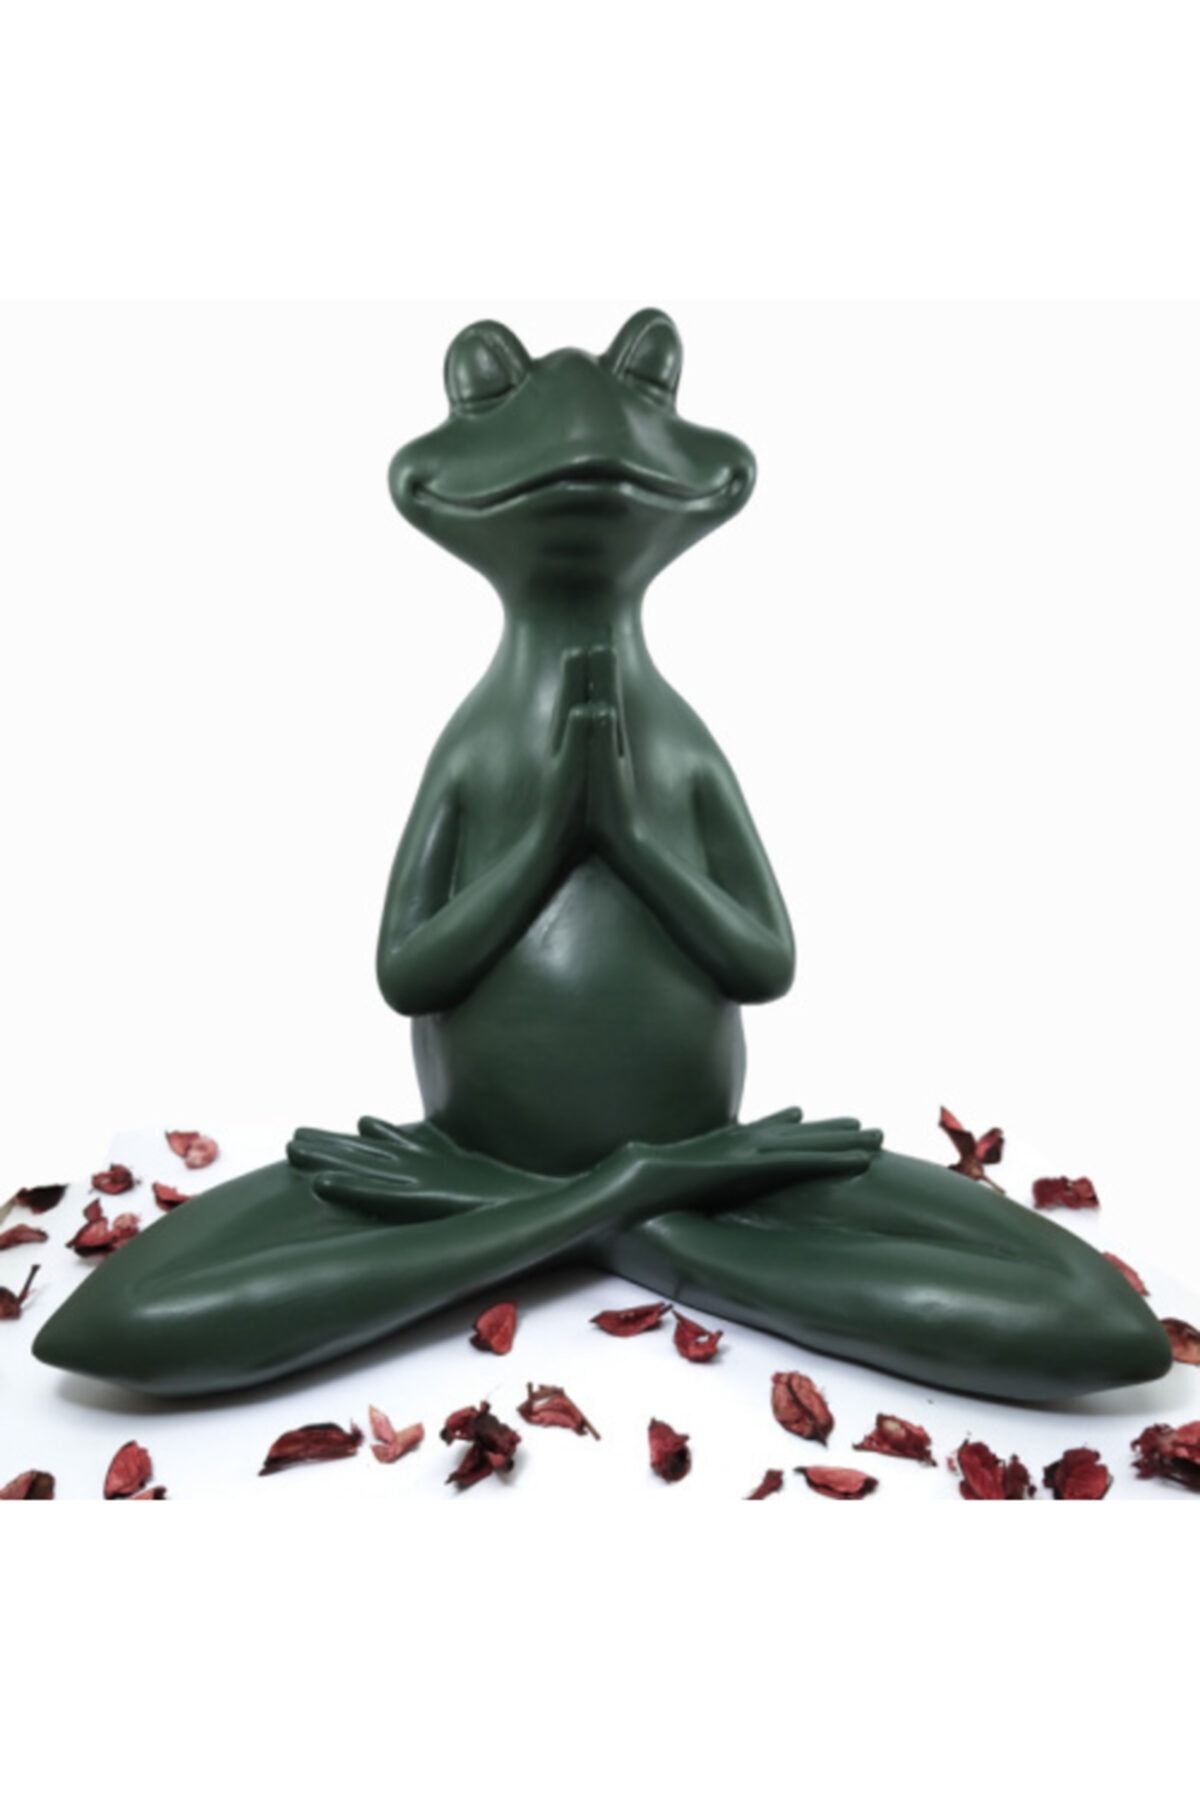 Tual Hobi Sanat Yeşil Yogacı Kurbağa Heykeli Dekoratif Obje Bilbo